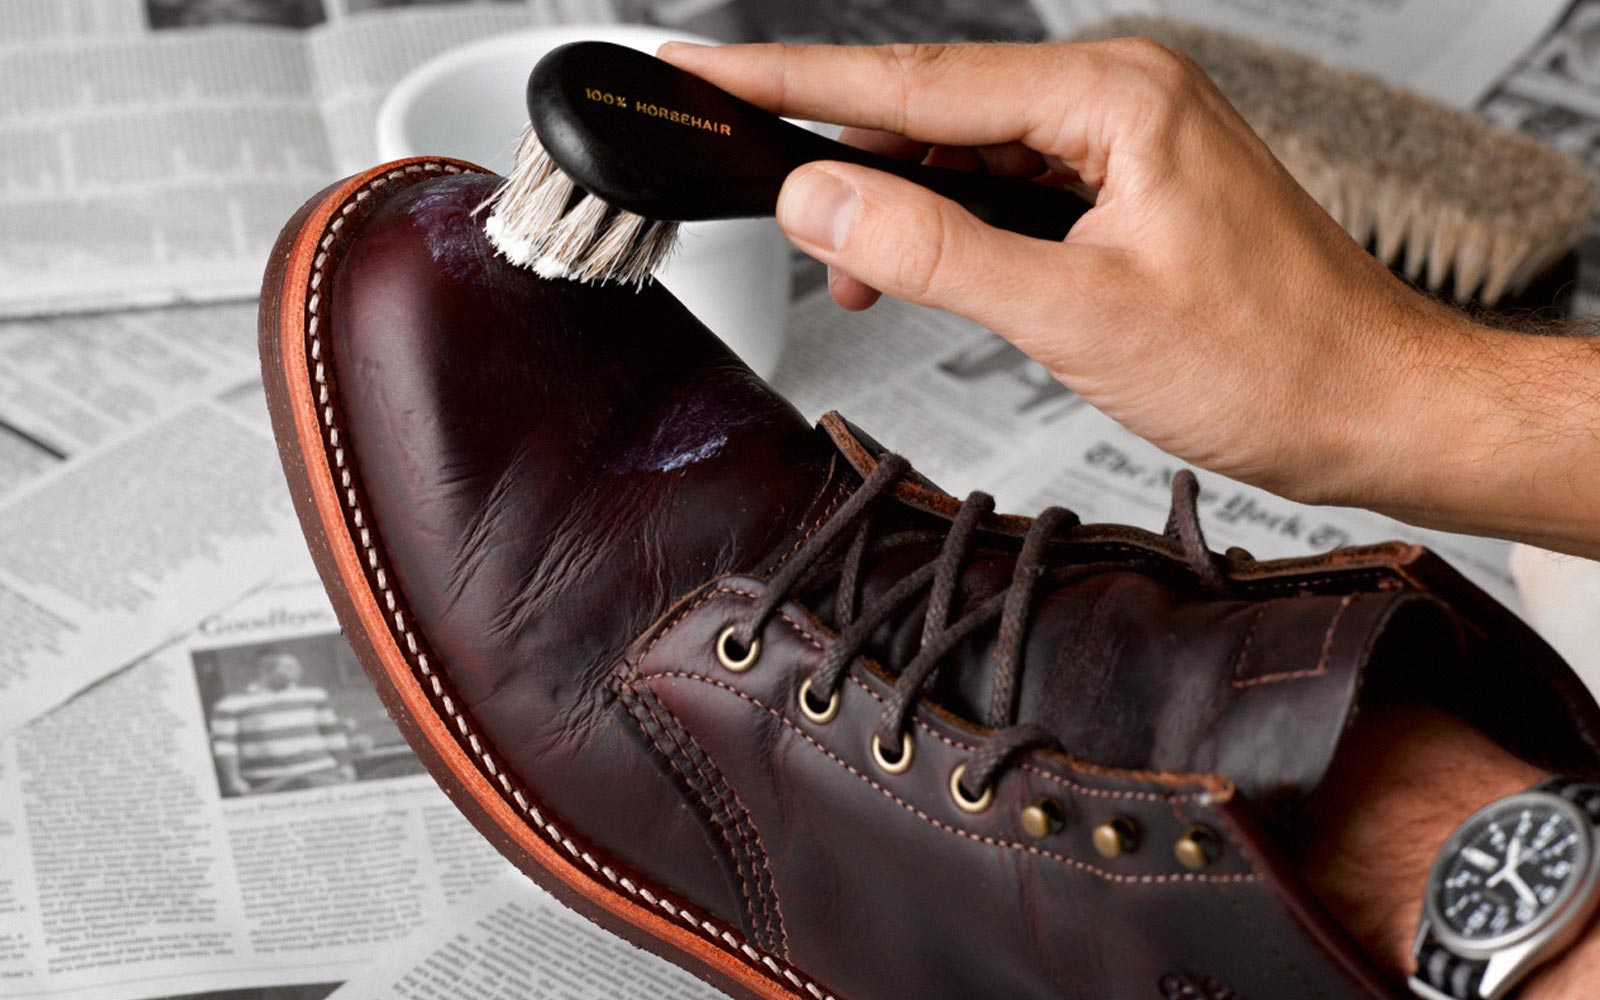 removing shoe polish